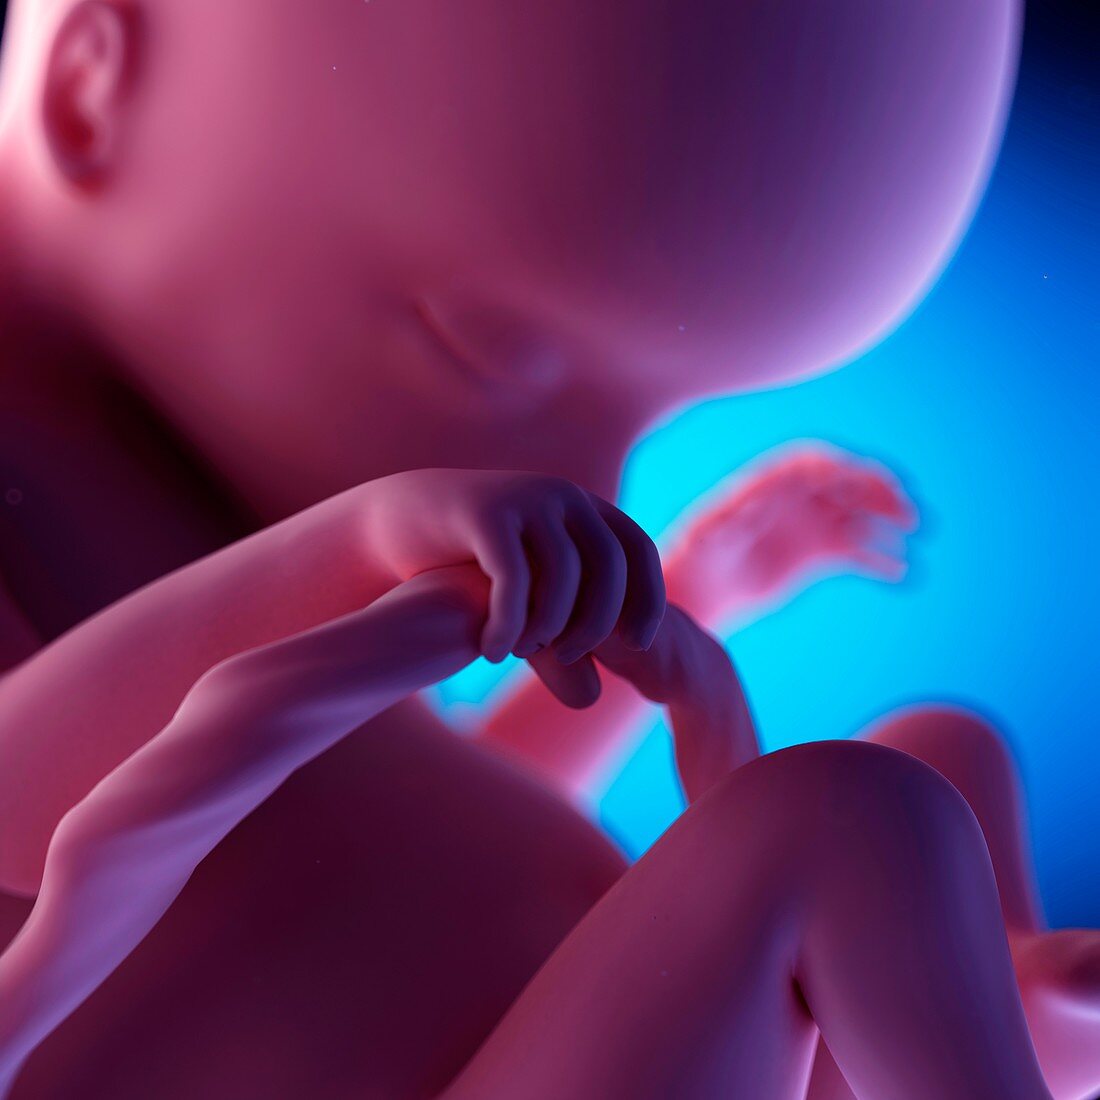 Human fetus at week 18 of gestation, illustration